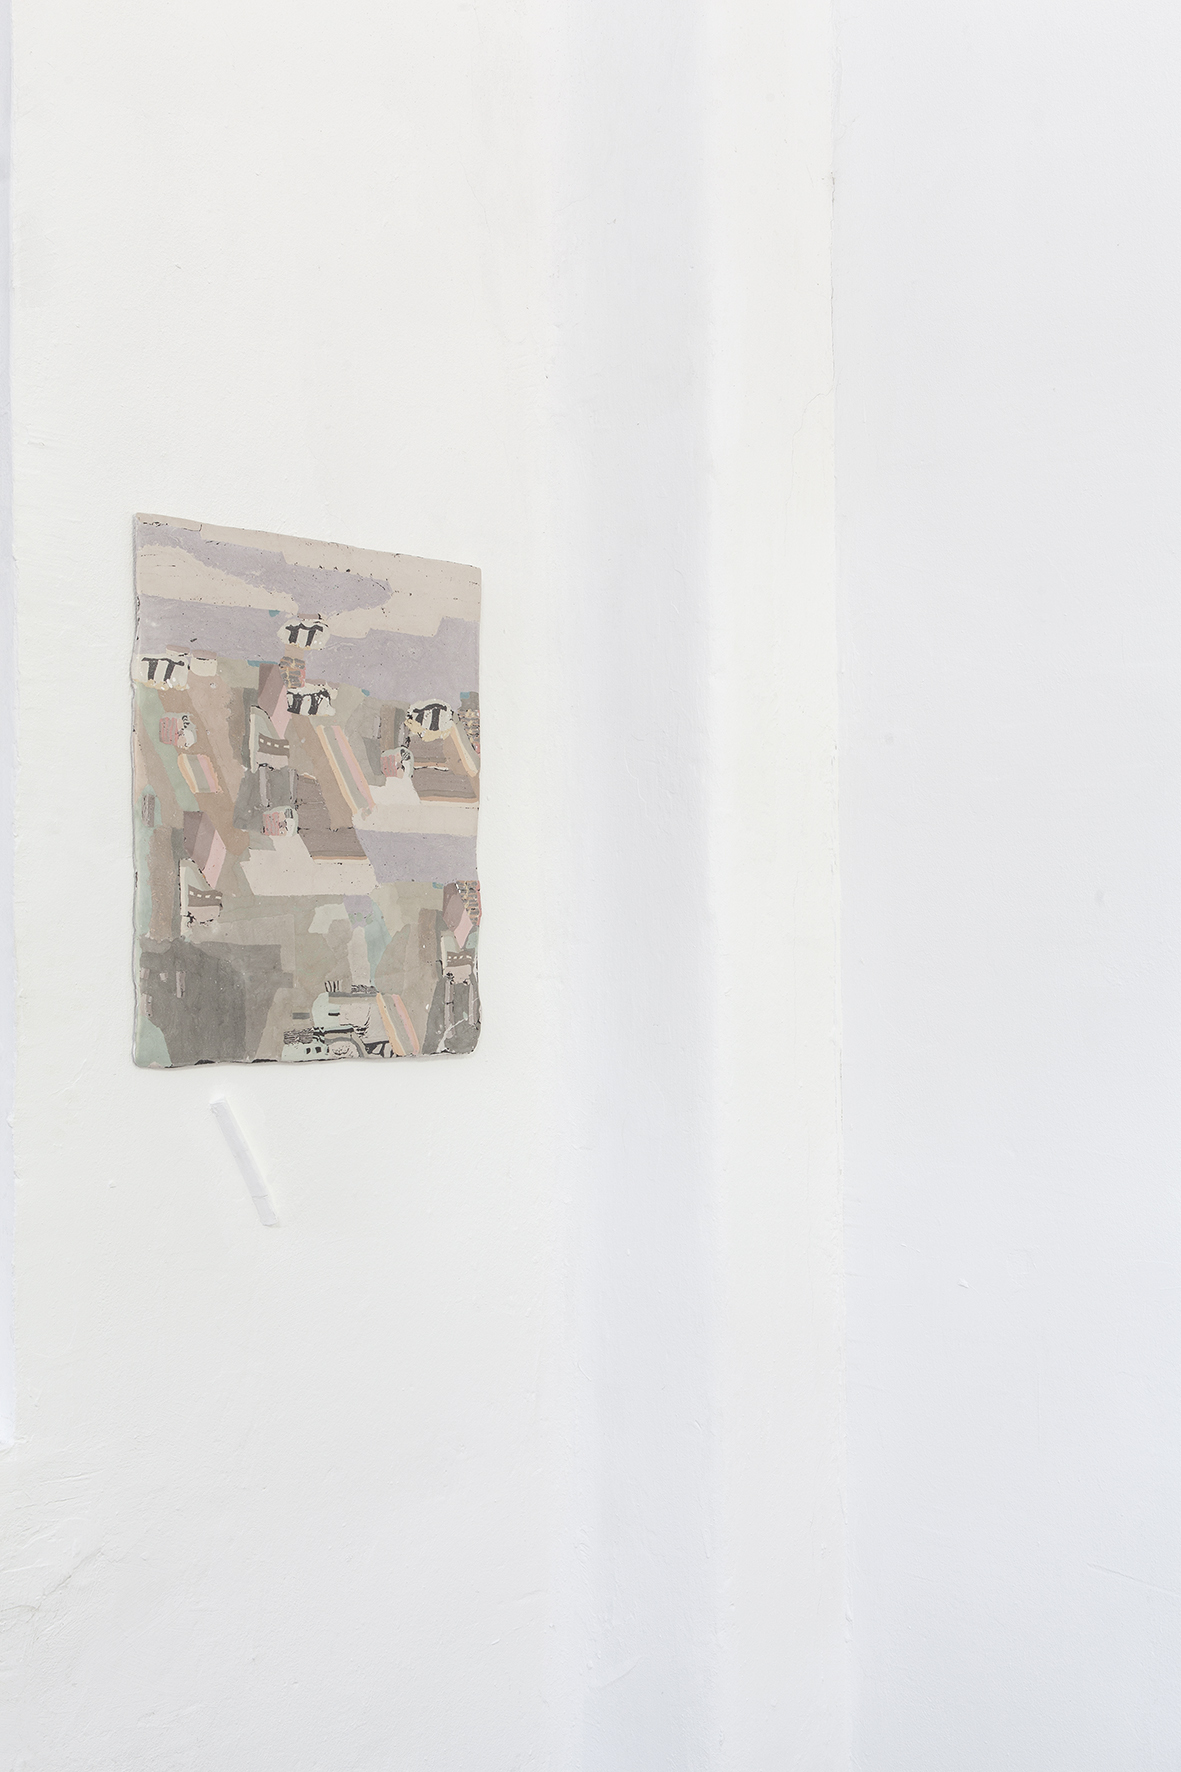 Heti Prack, Friedl, 2021, 57 x 42 cm, Gypsum, pigments, bone glue